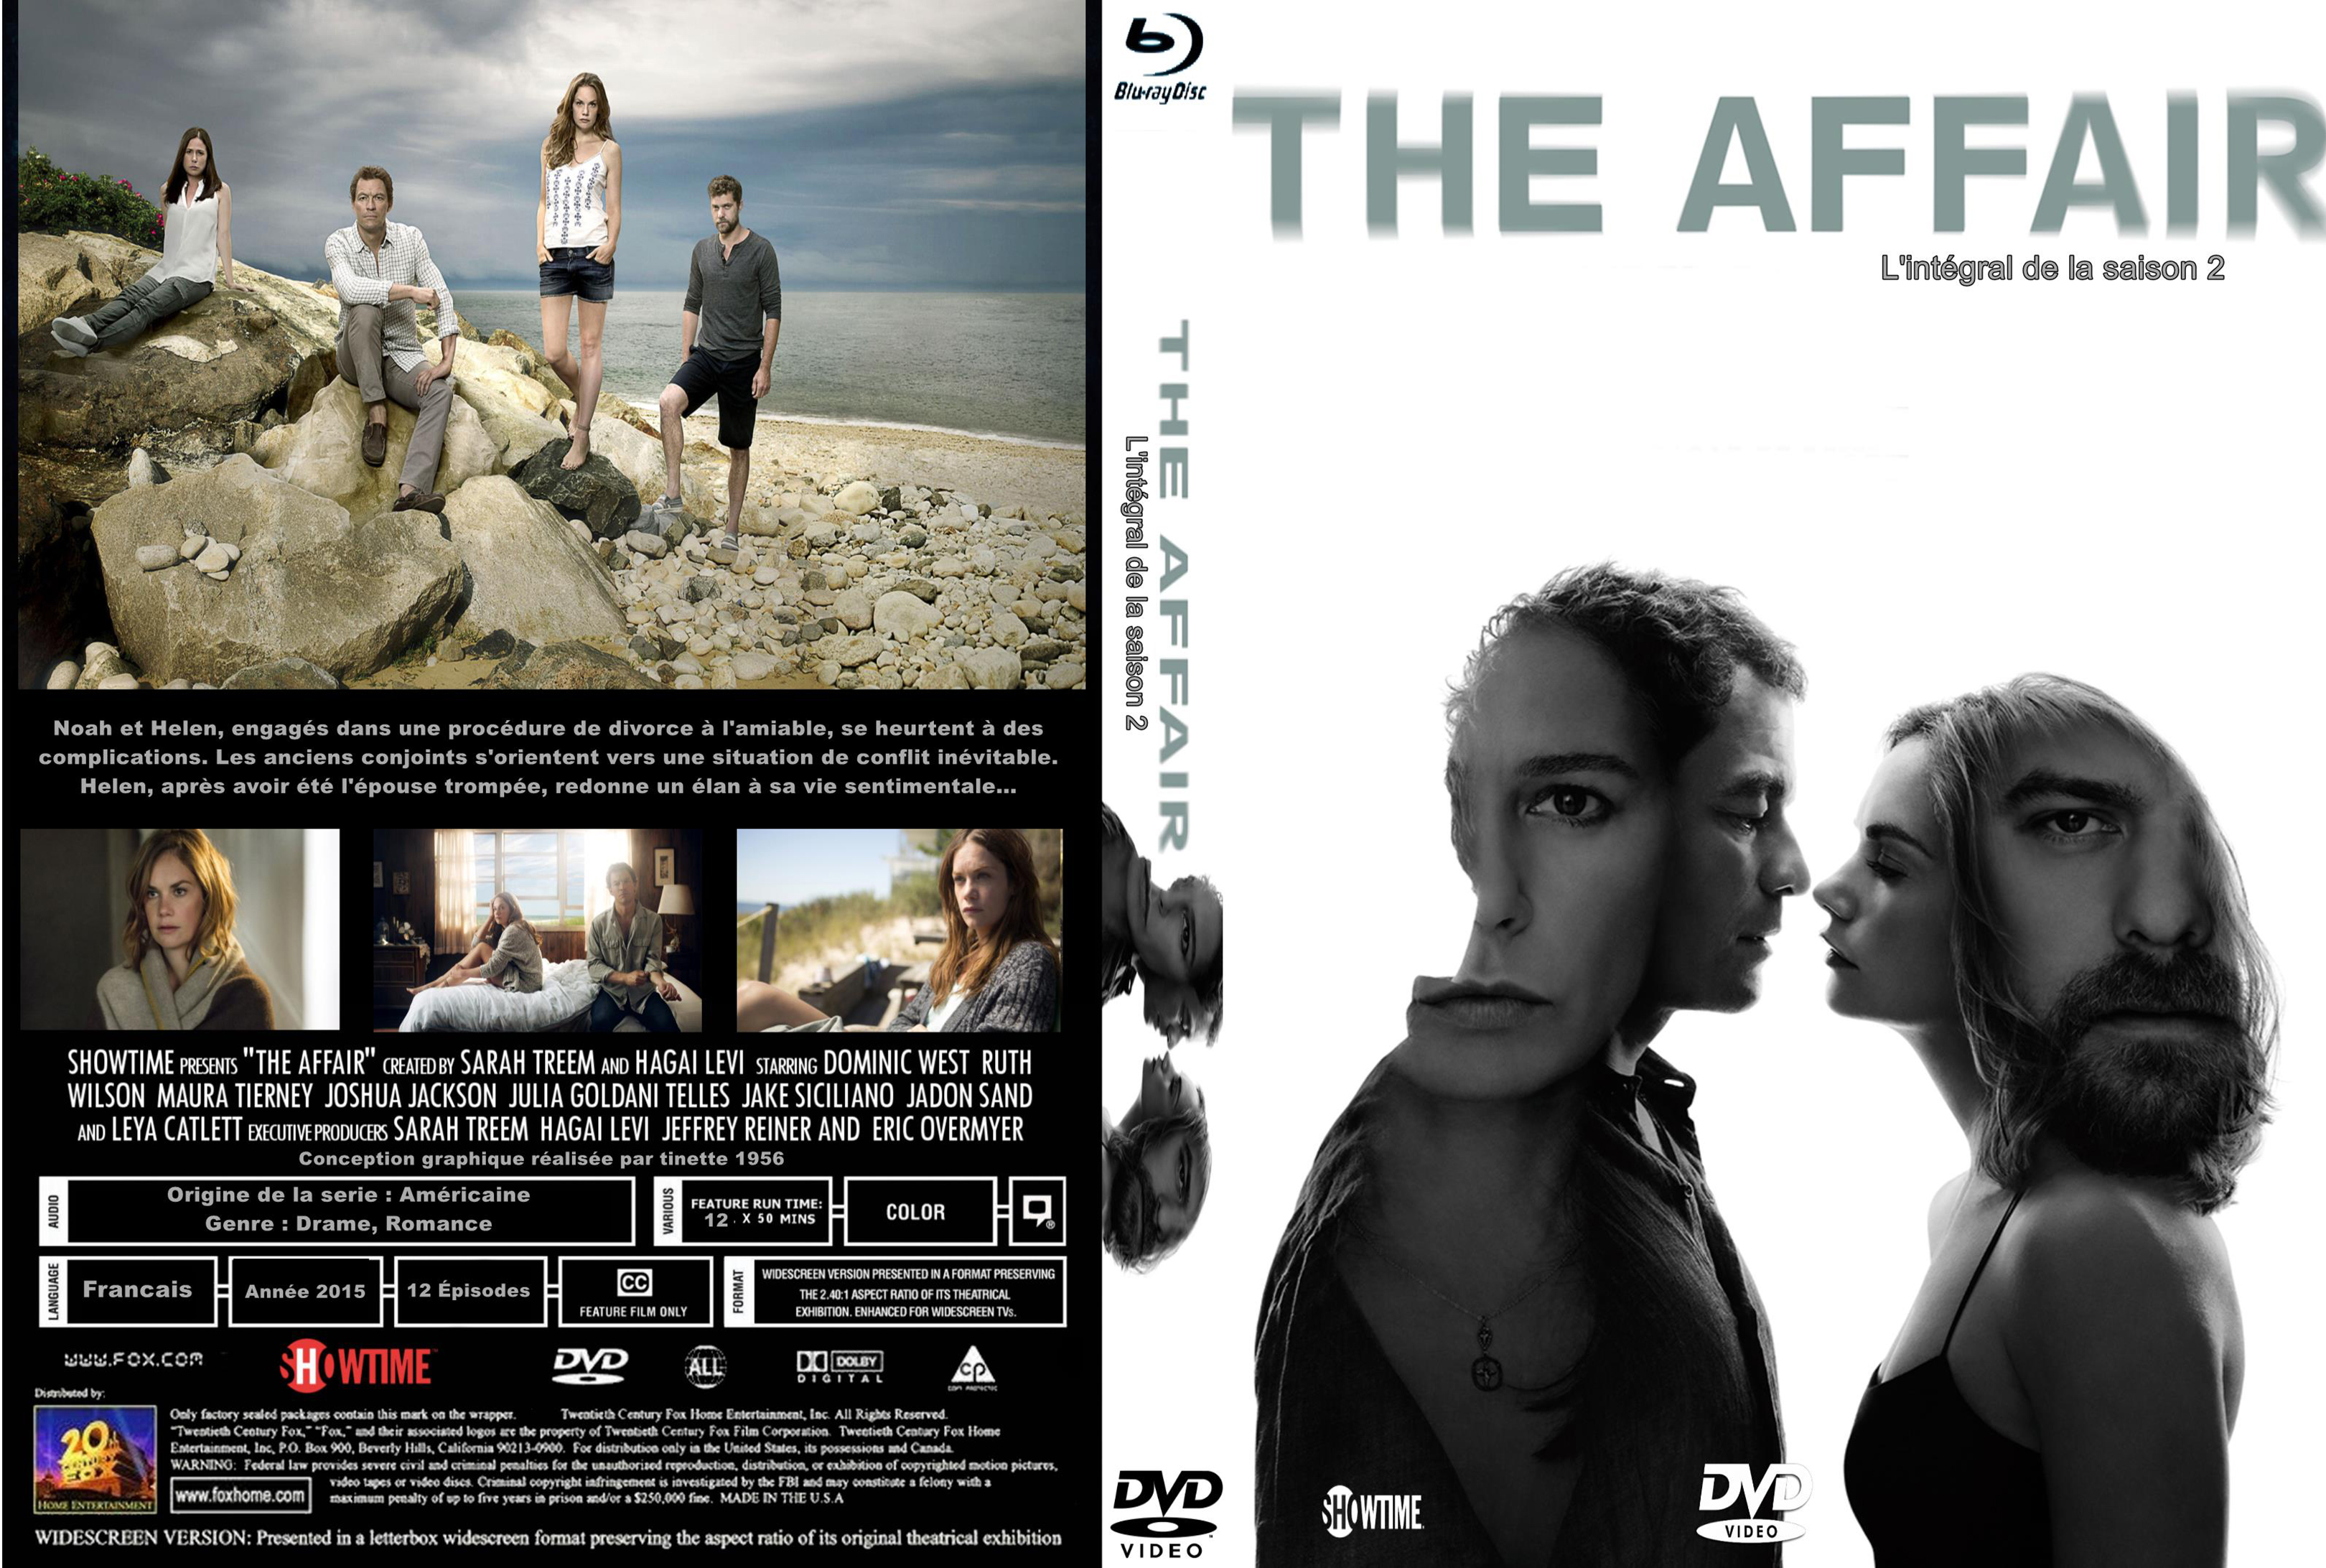 Jaquette DVD The affair saison 2 custom